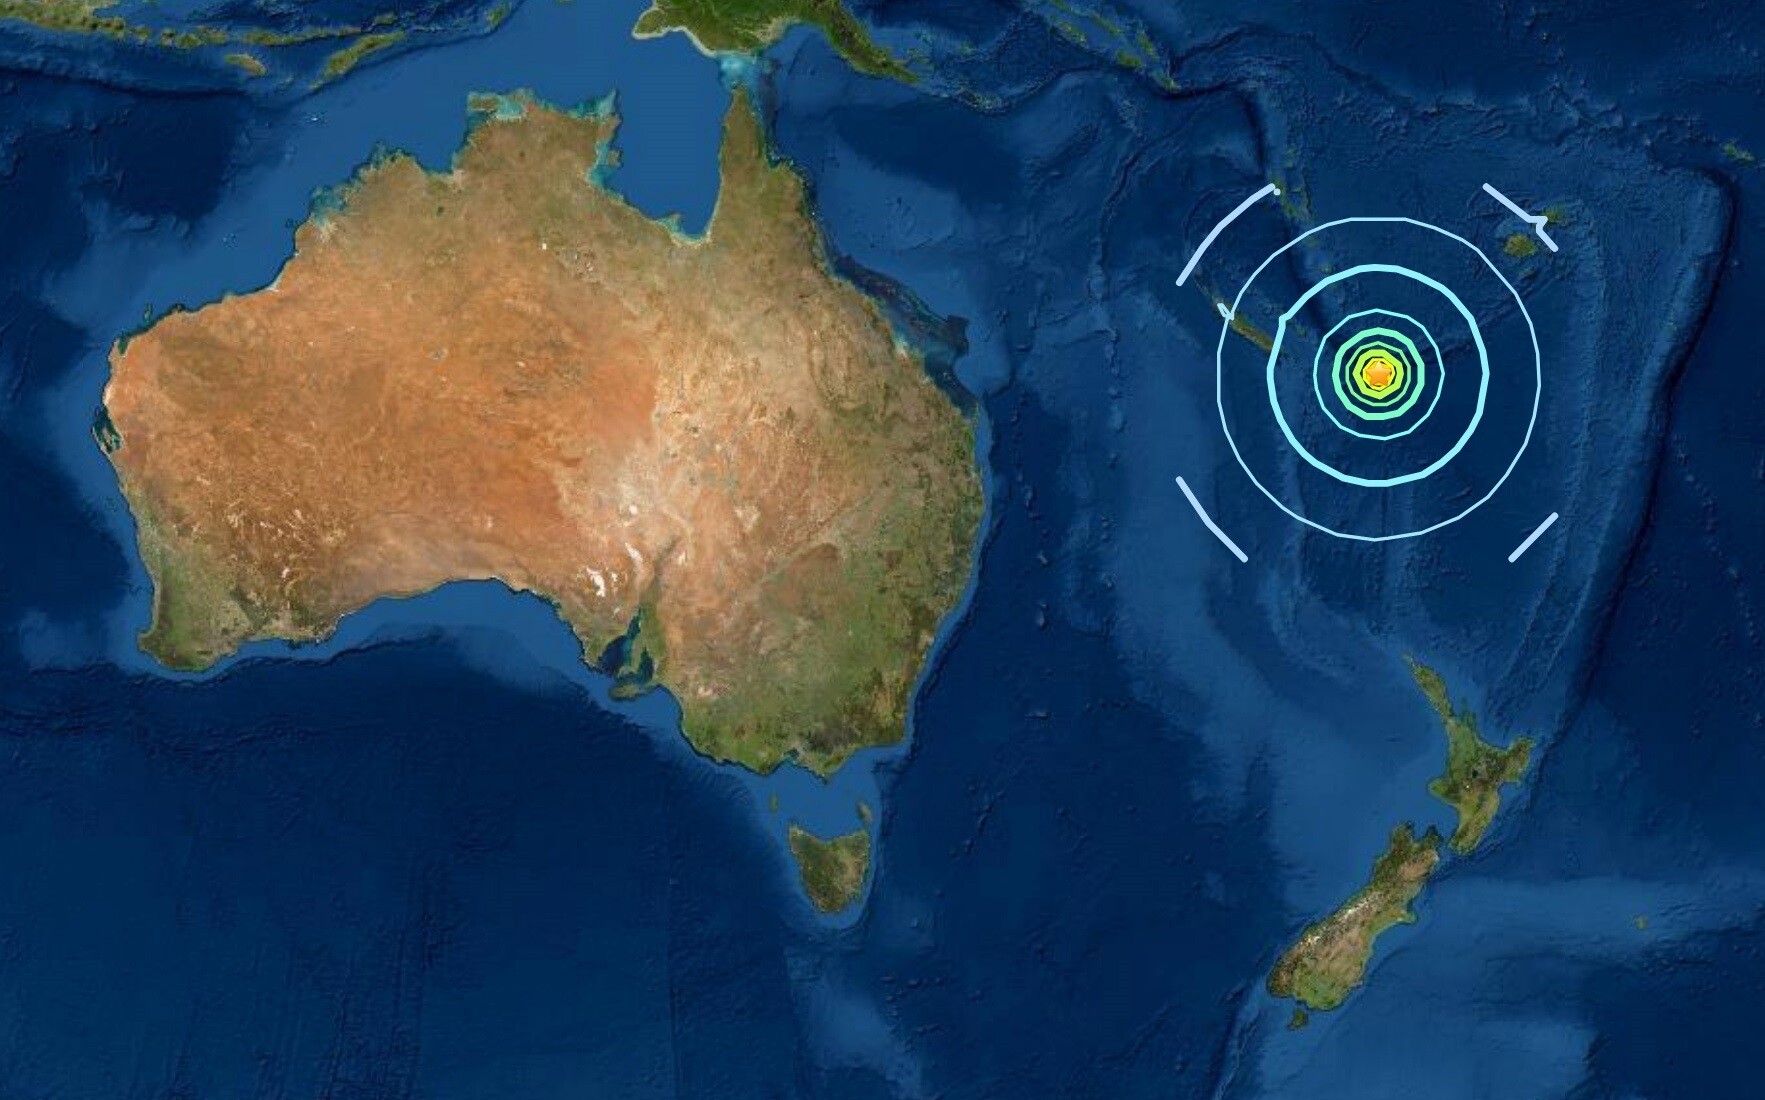 Terremoto de magnitude 7,7 atinge pacífico Sul e causa alerta para tsunamis